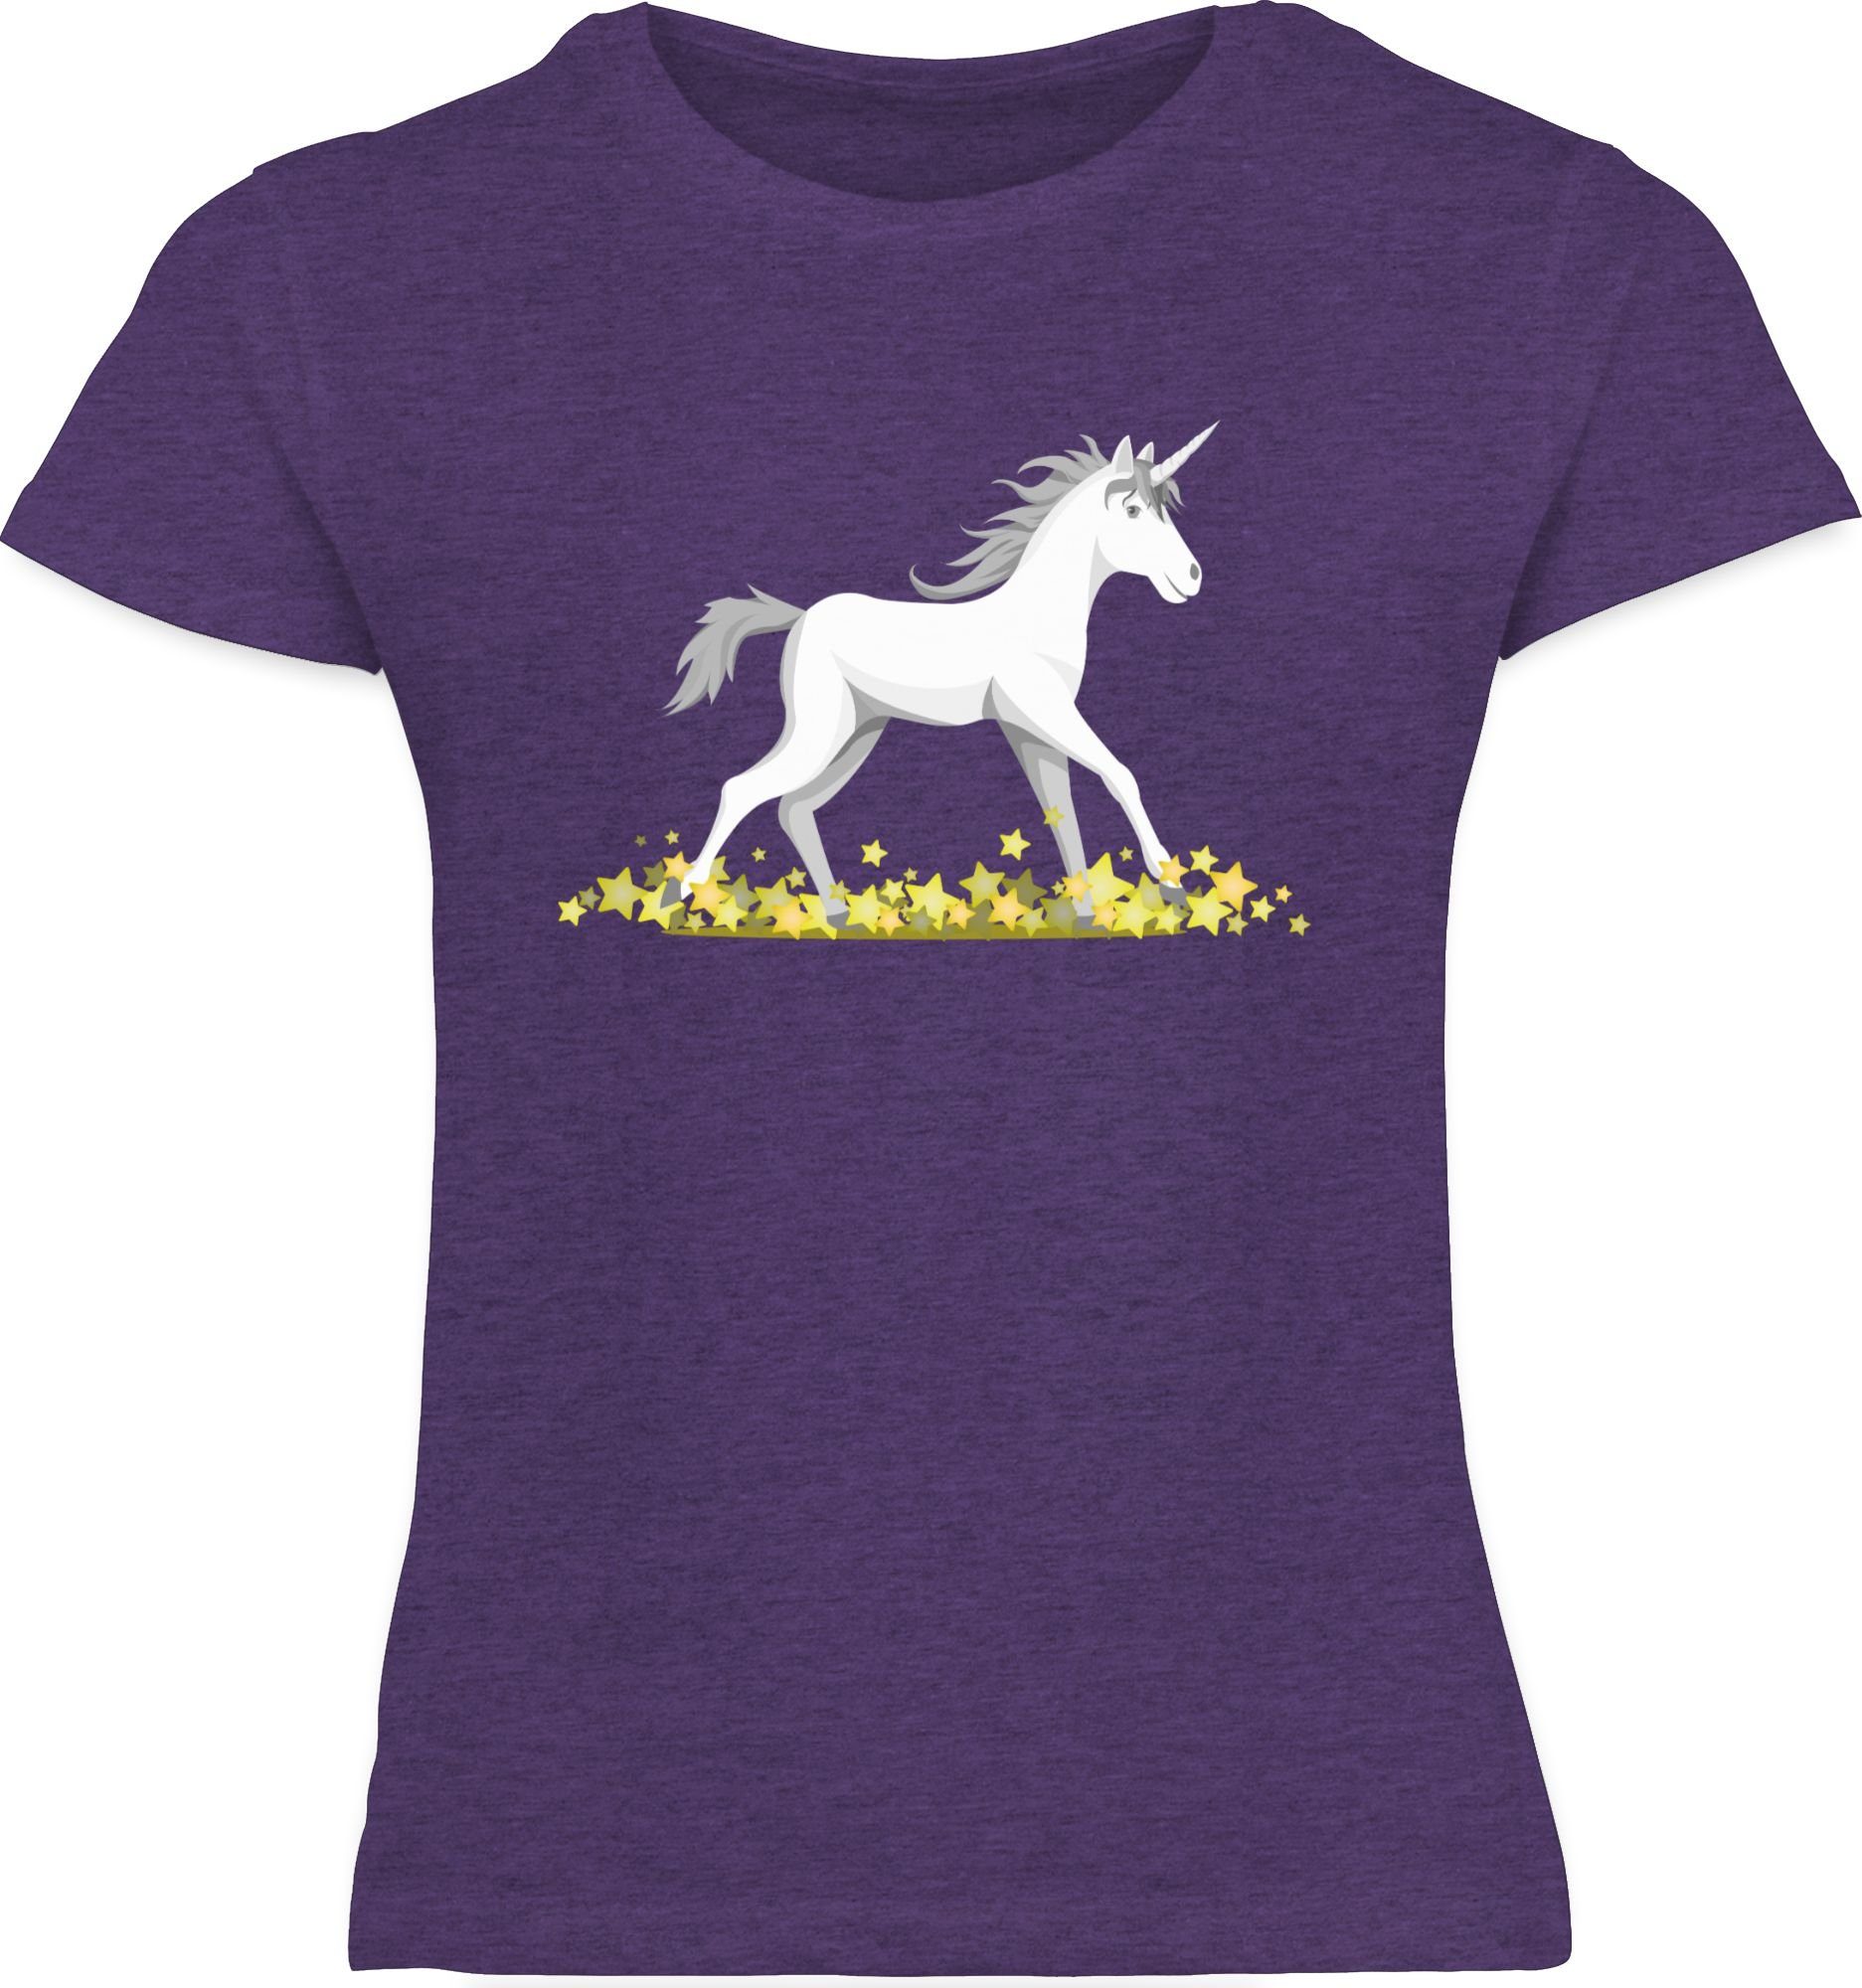 Lila Meliert Kinderkleidung Unicorn T-Shirt Co 3 und Einhorn Shirtracer